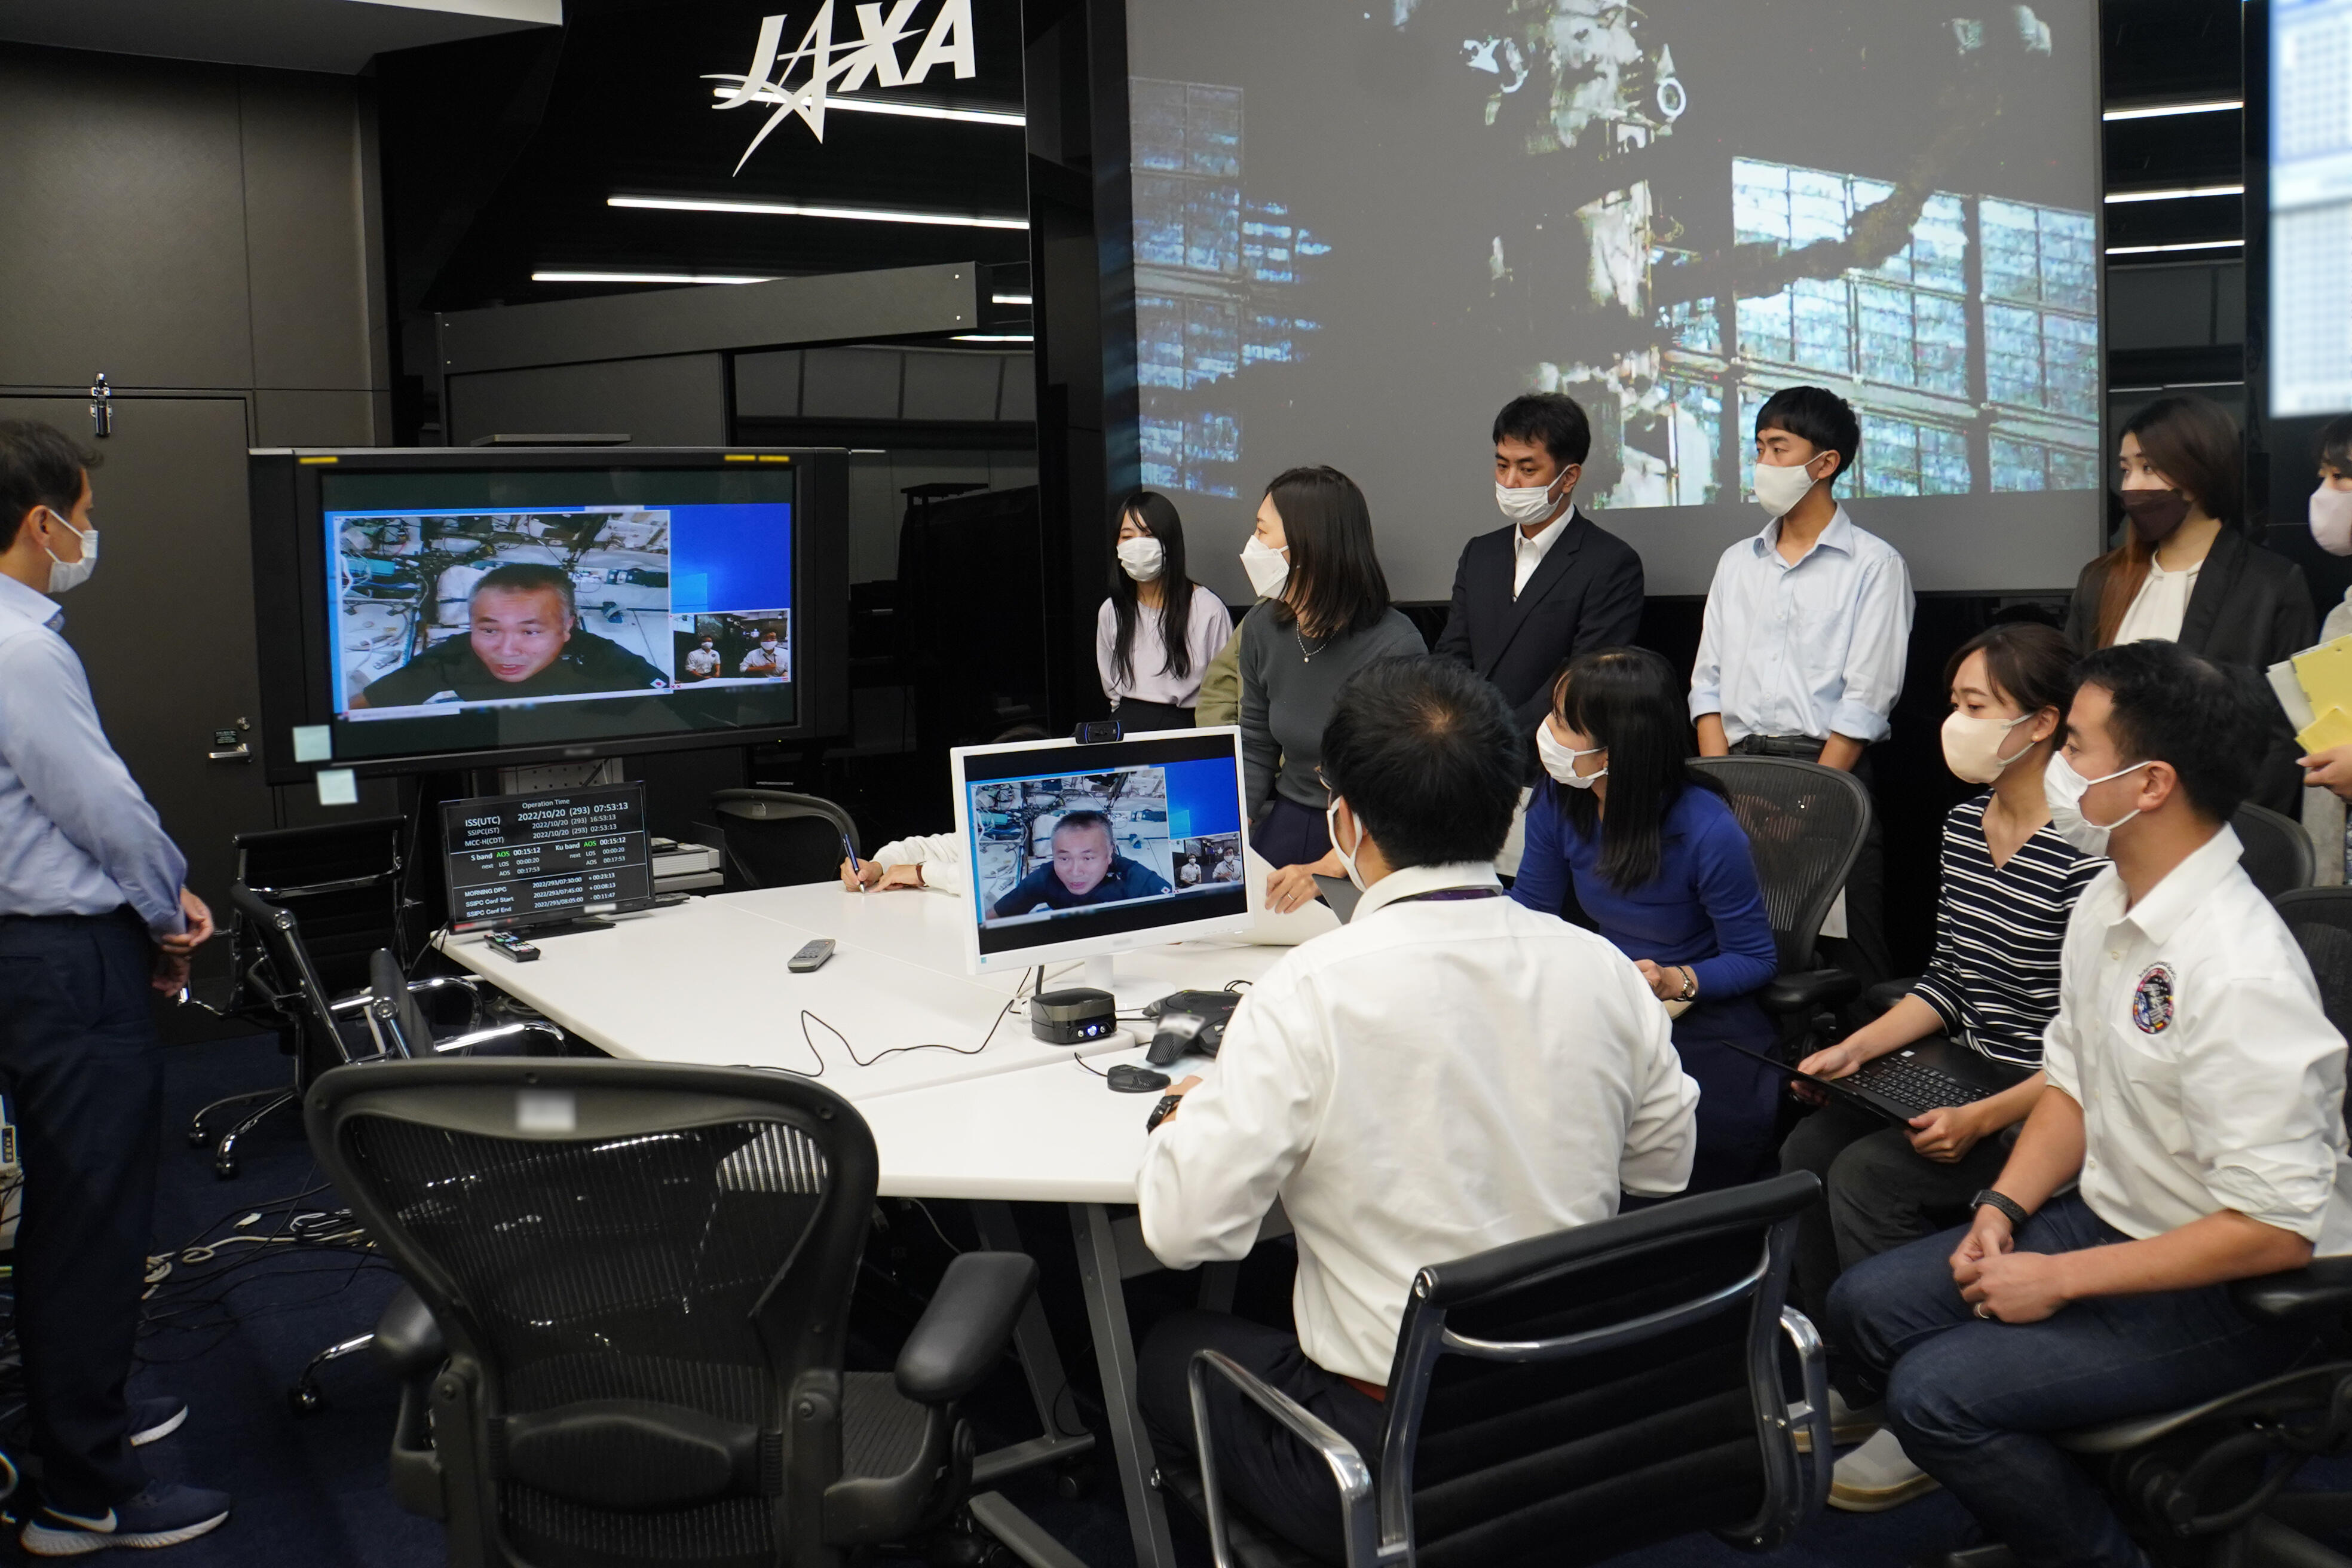 Meeting held between Astronaut WAKATA and the ground operations staff